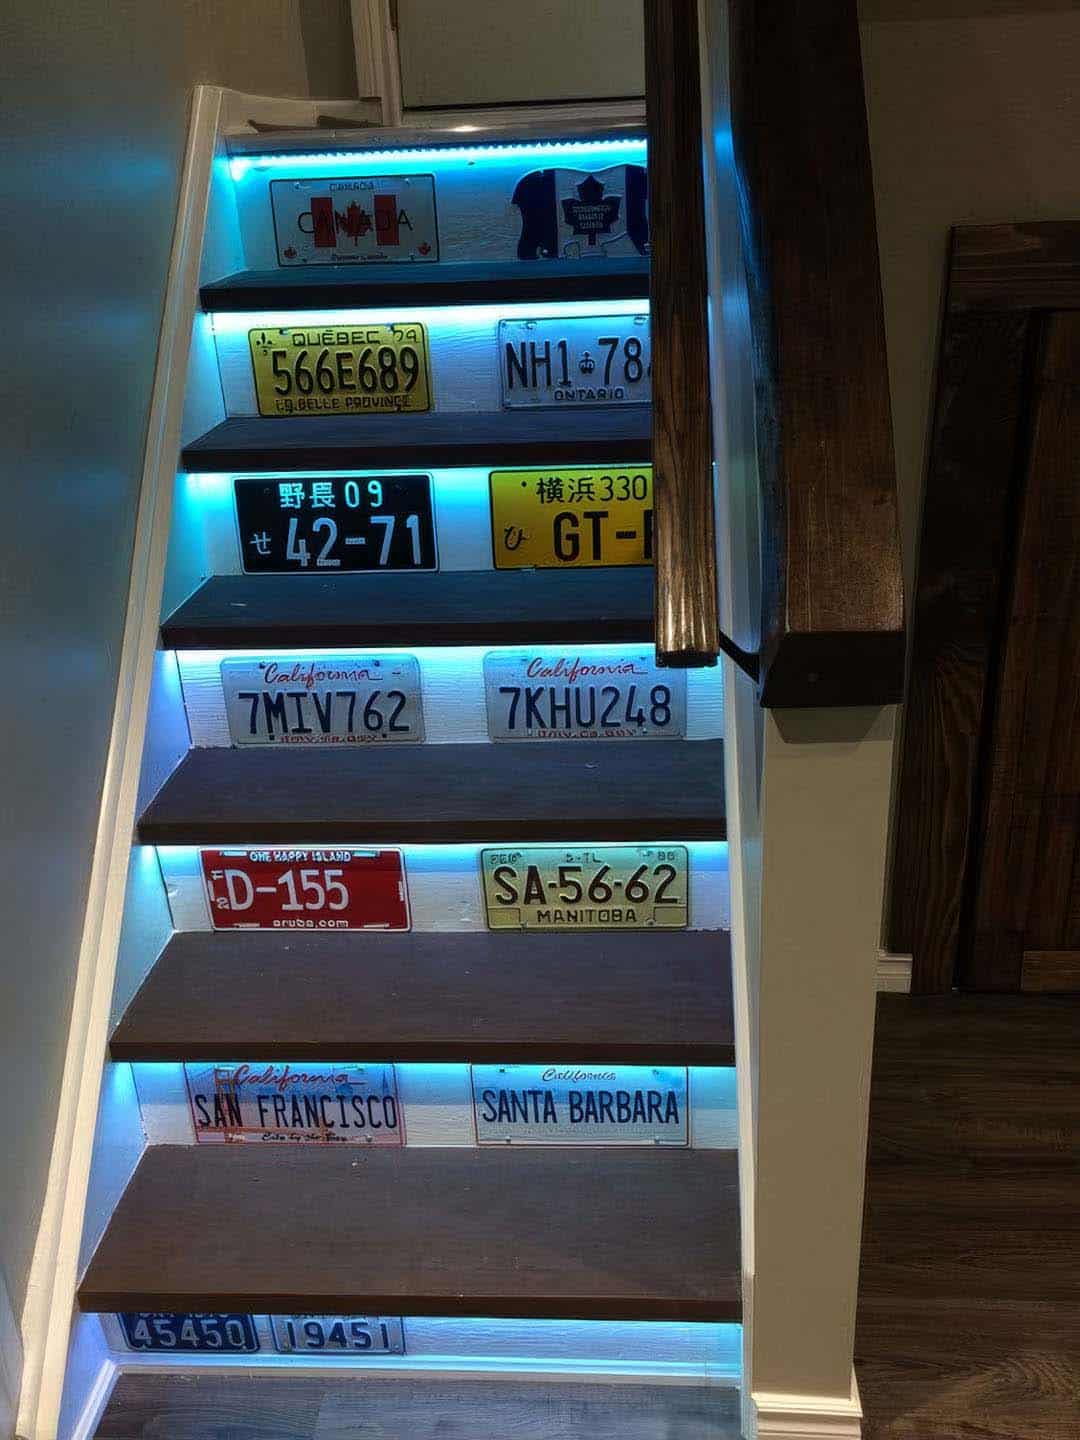 LED lights illuminate license plates on stairs